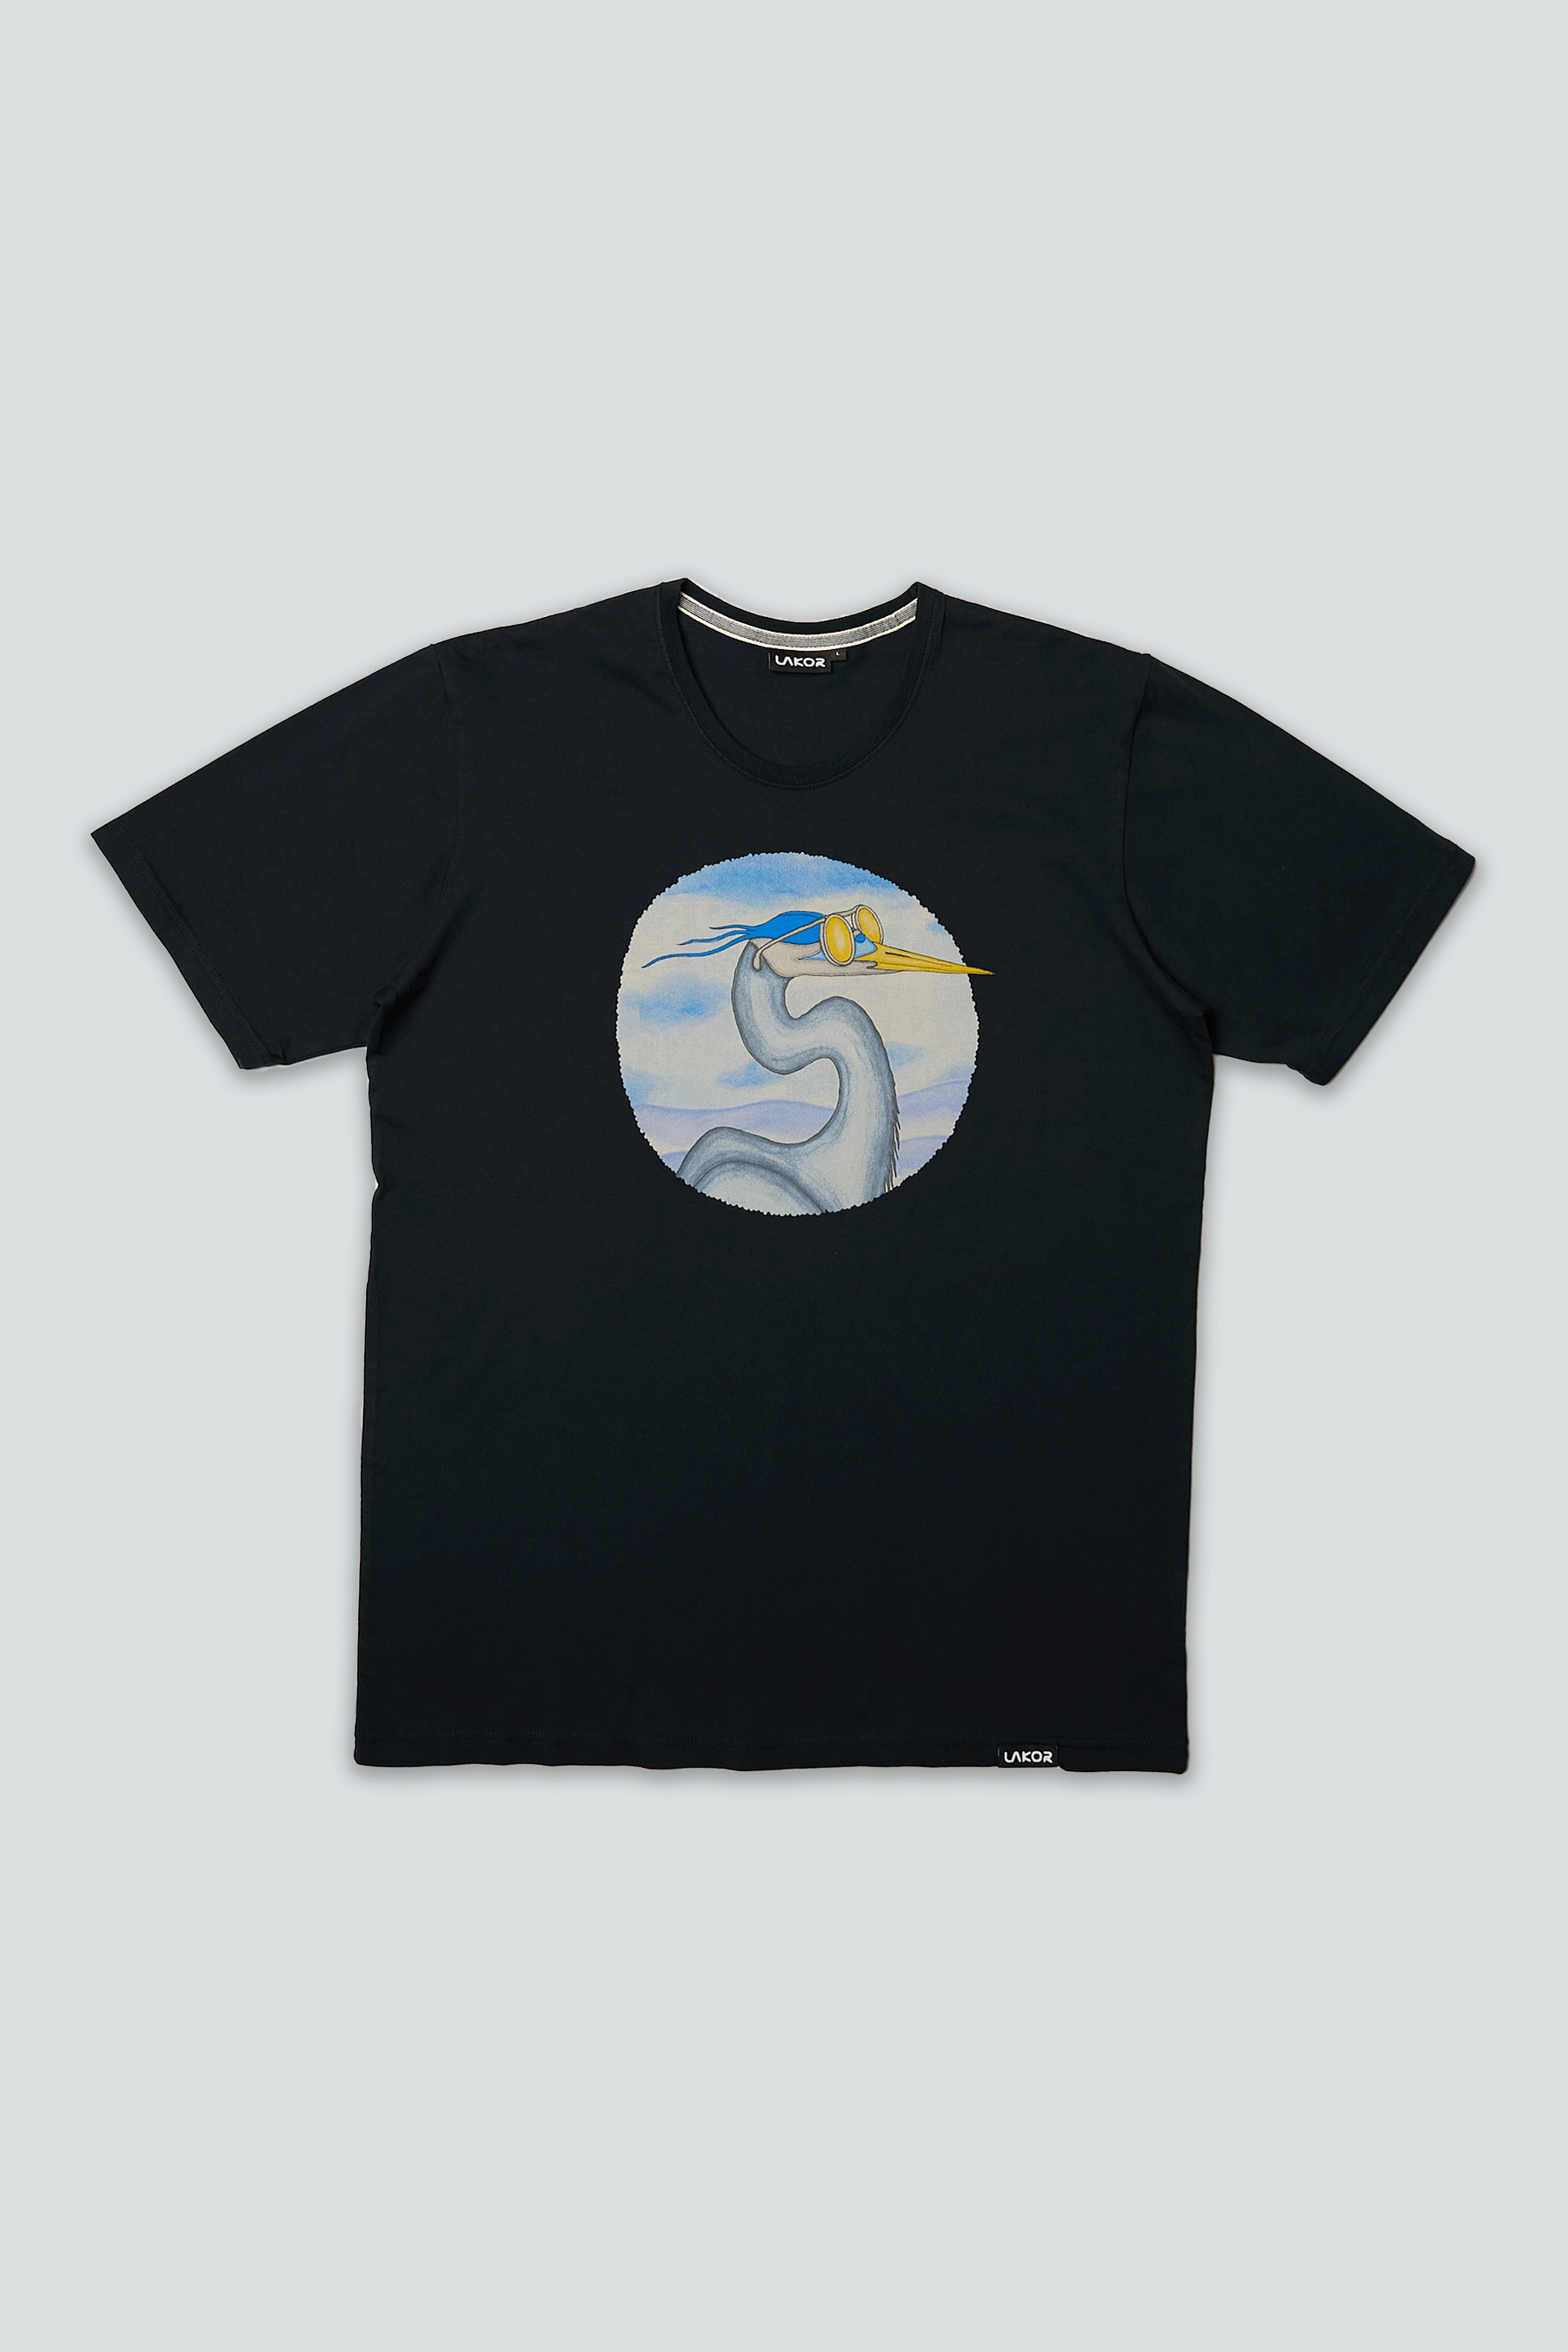 Egret T-shirt (Moonless Night)